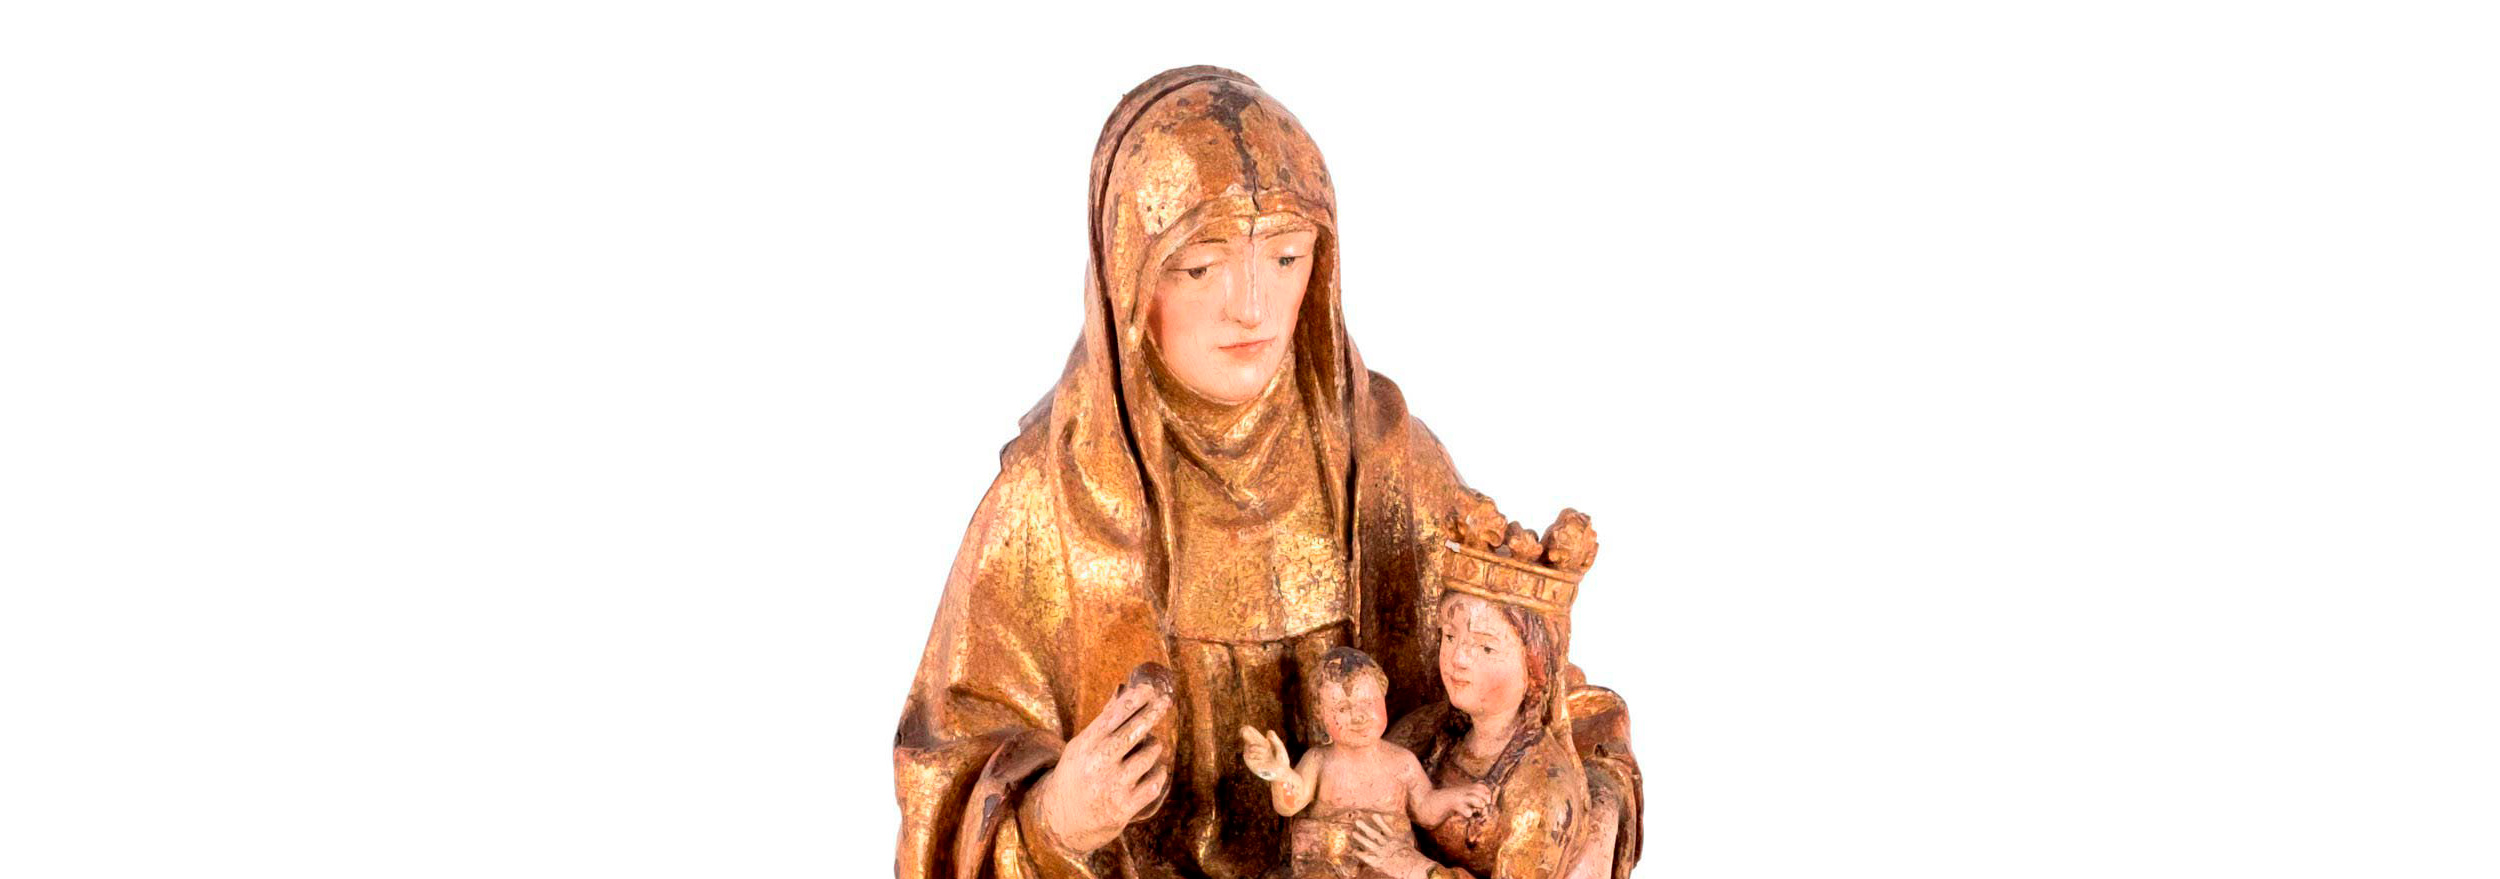 Durán saca a la venta una interesante escultura de Santa Ana triple del S. XVI